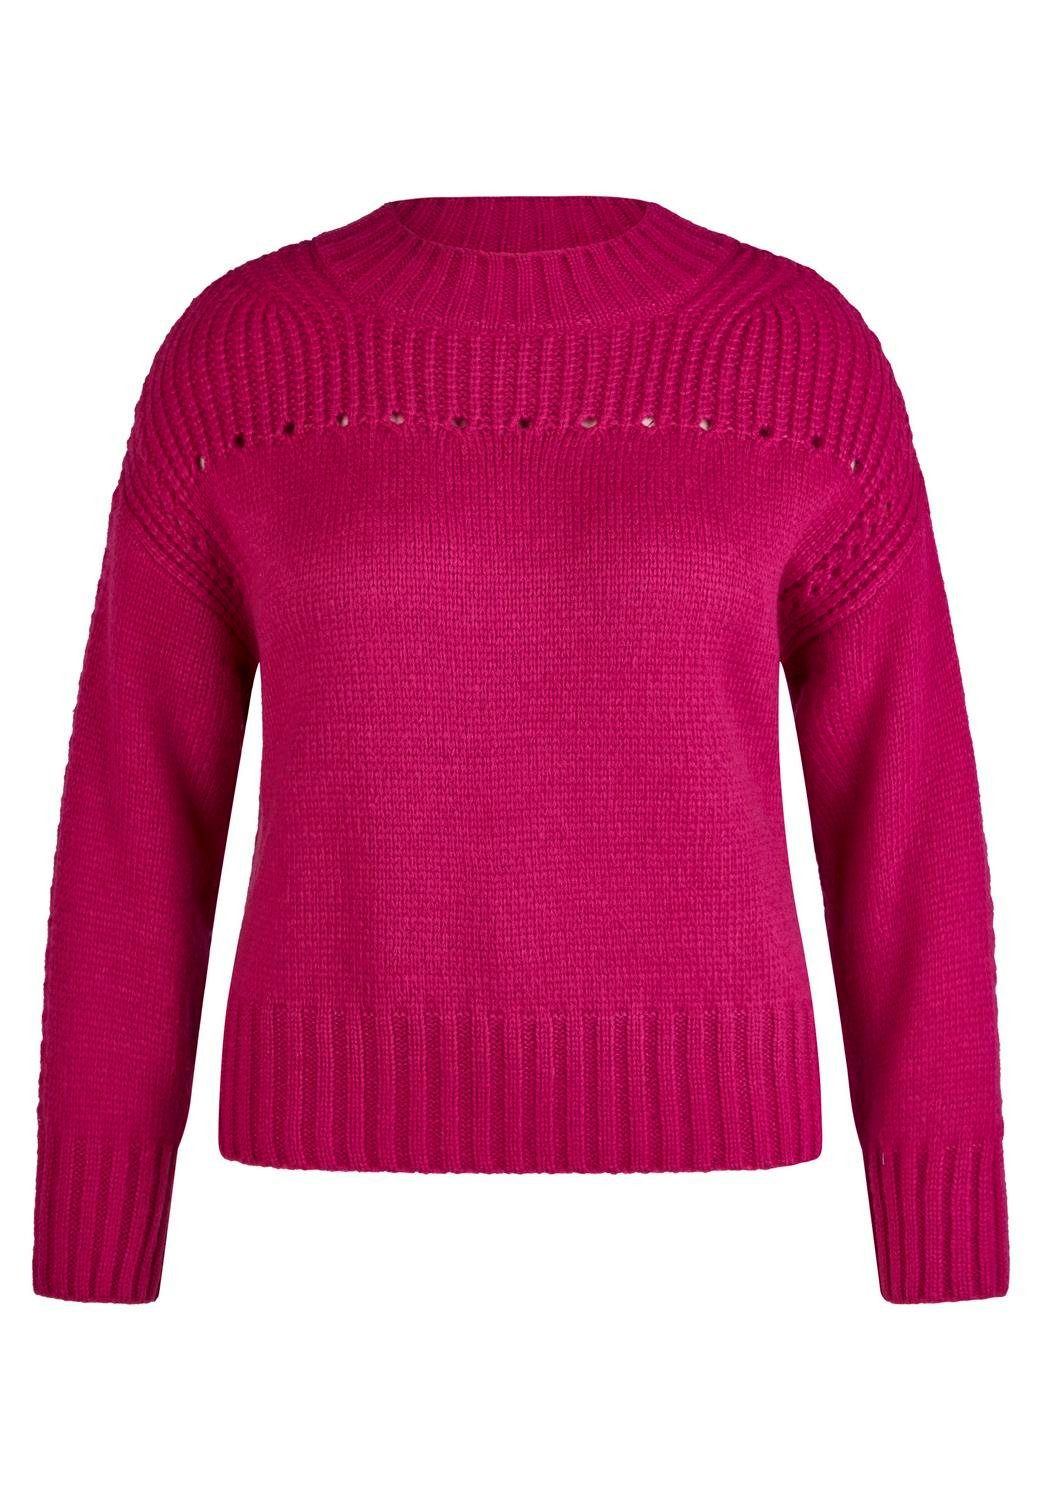 LeComte Sweatshirt Pullover, Hyazinthe